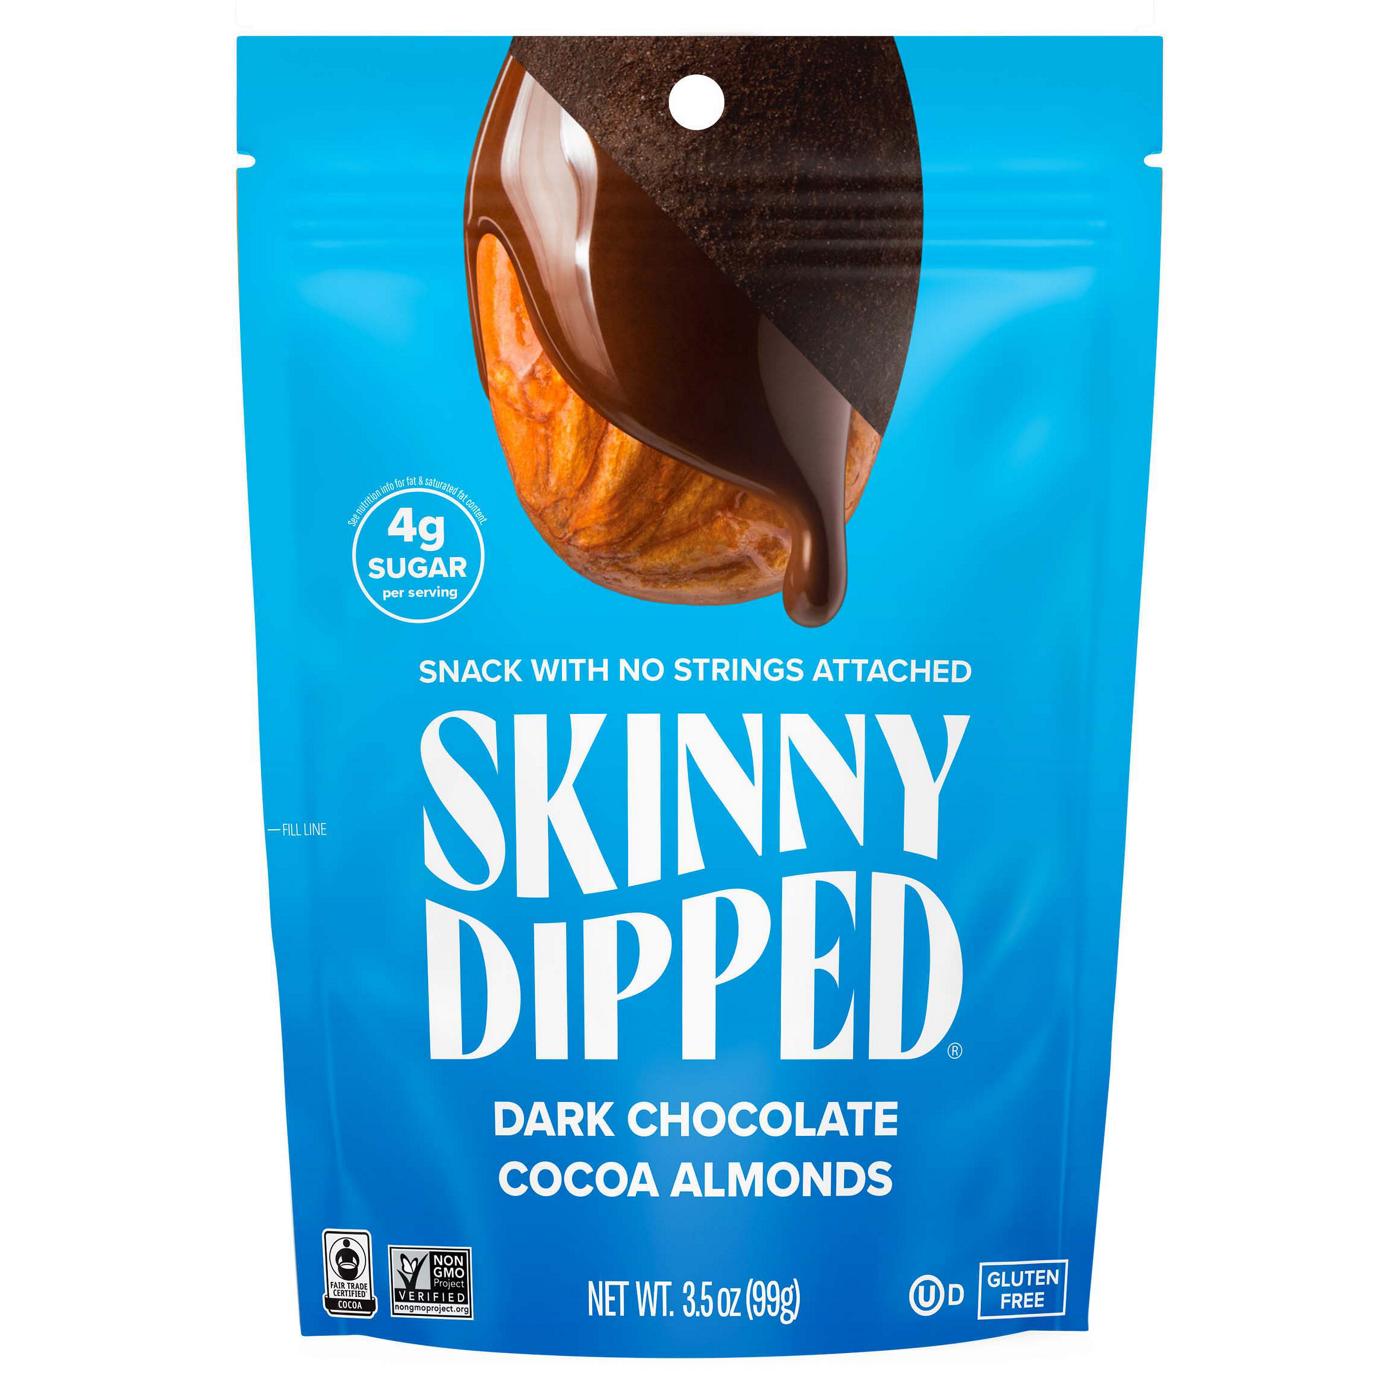 SkinnyDipped Dark Chocolate Cocoa Almonds; image 1 of 2